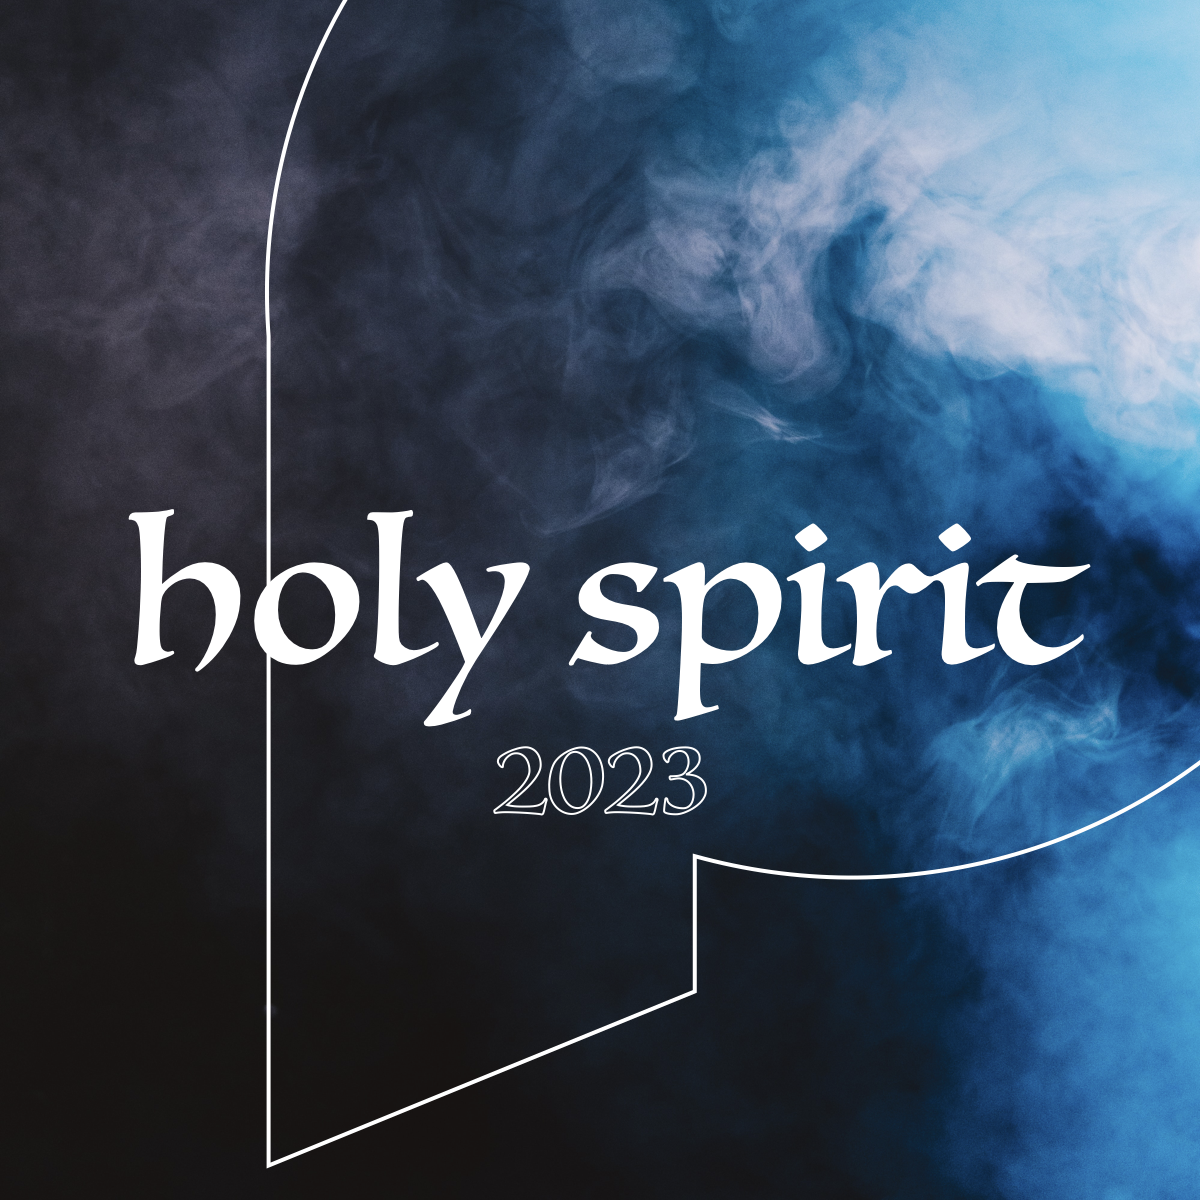 Holy Spirit 2023